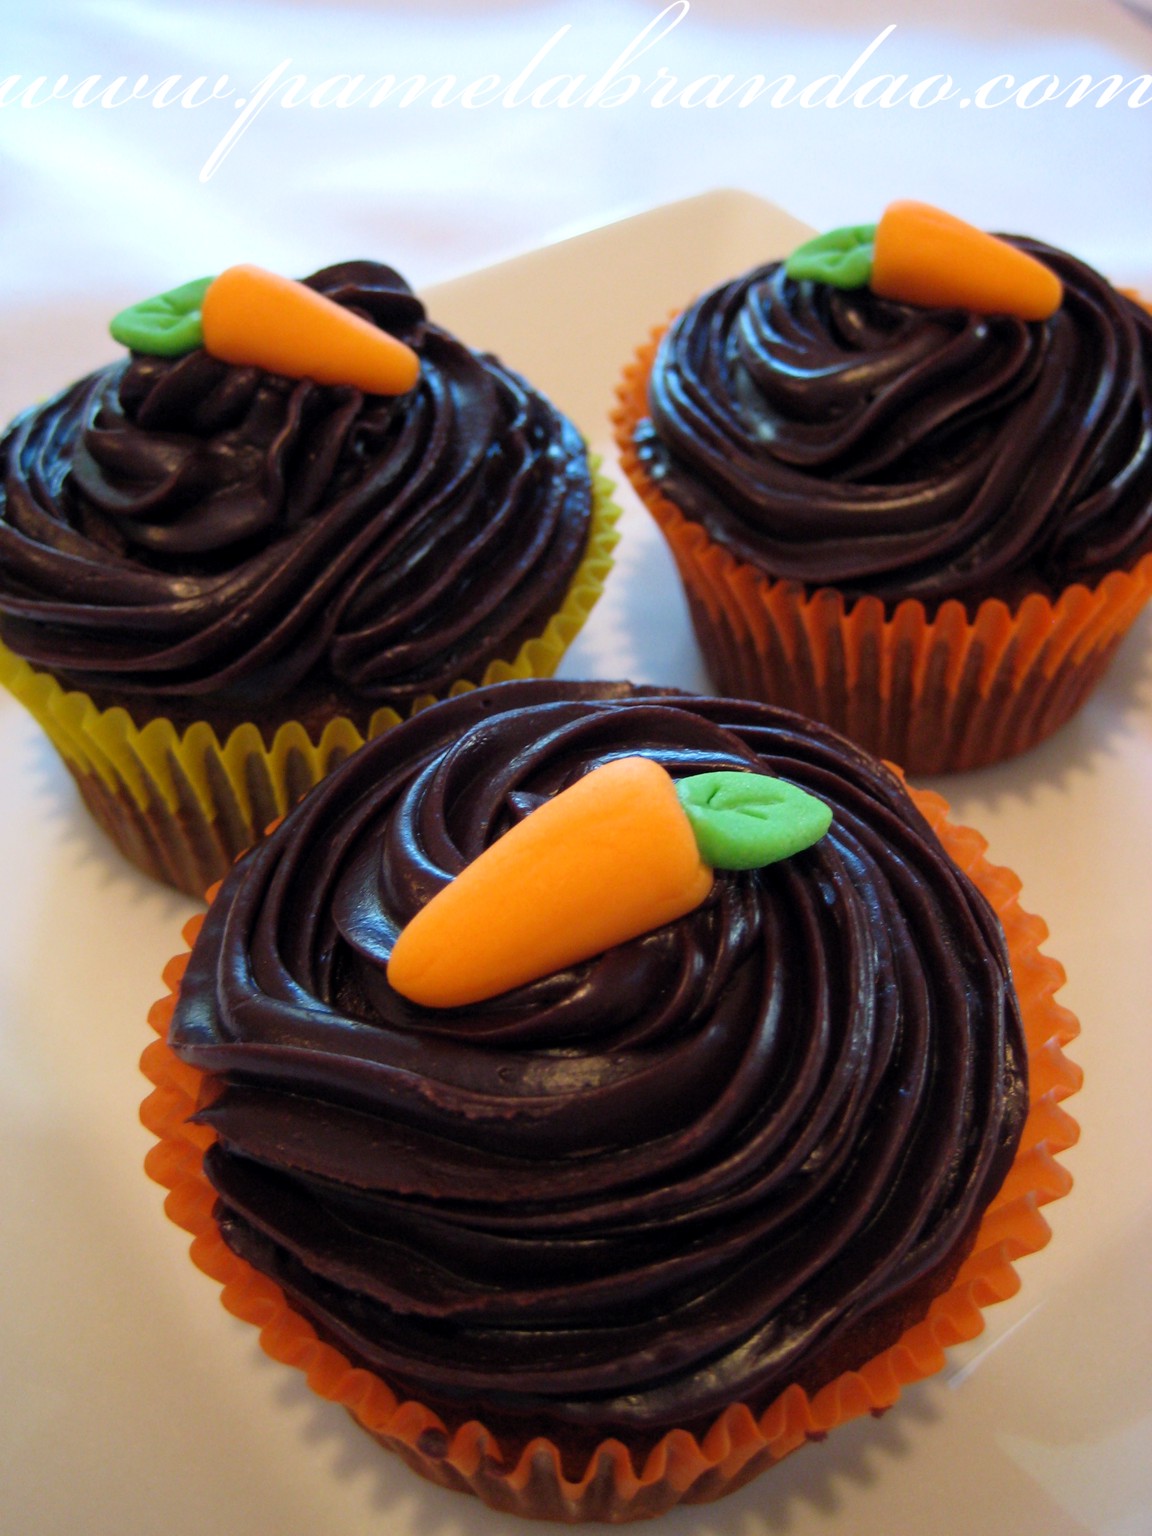 Cupcake de cenoura é alternativa para substituir tradicional Ovo de Páscoa, Receitando